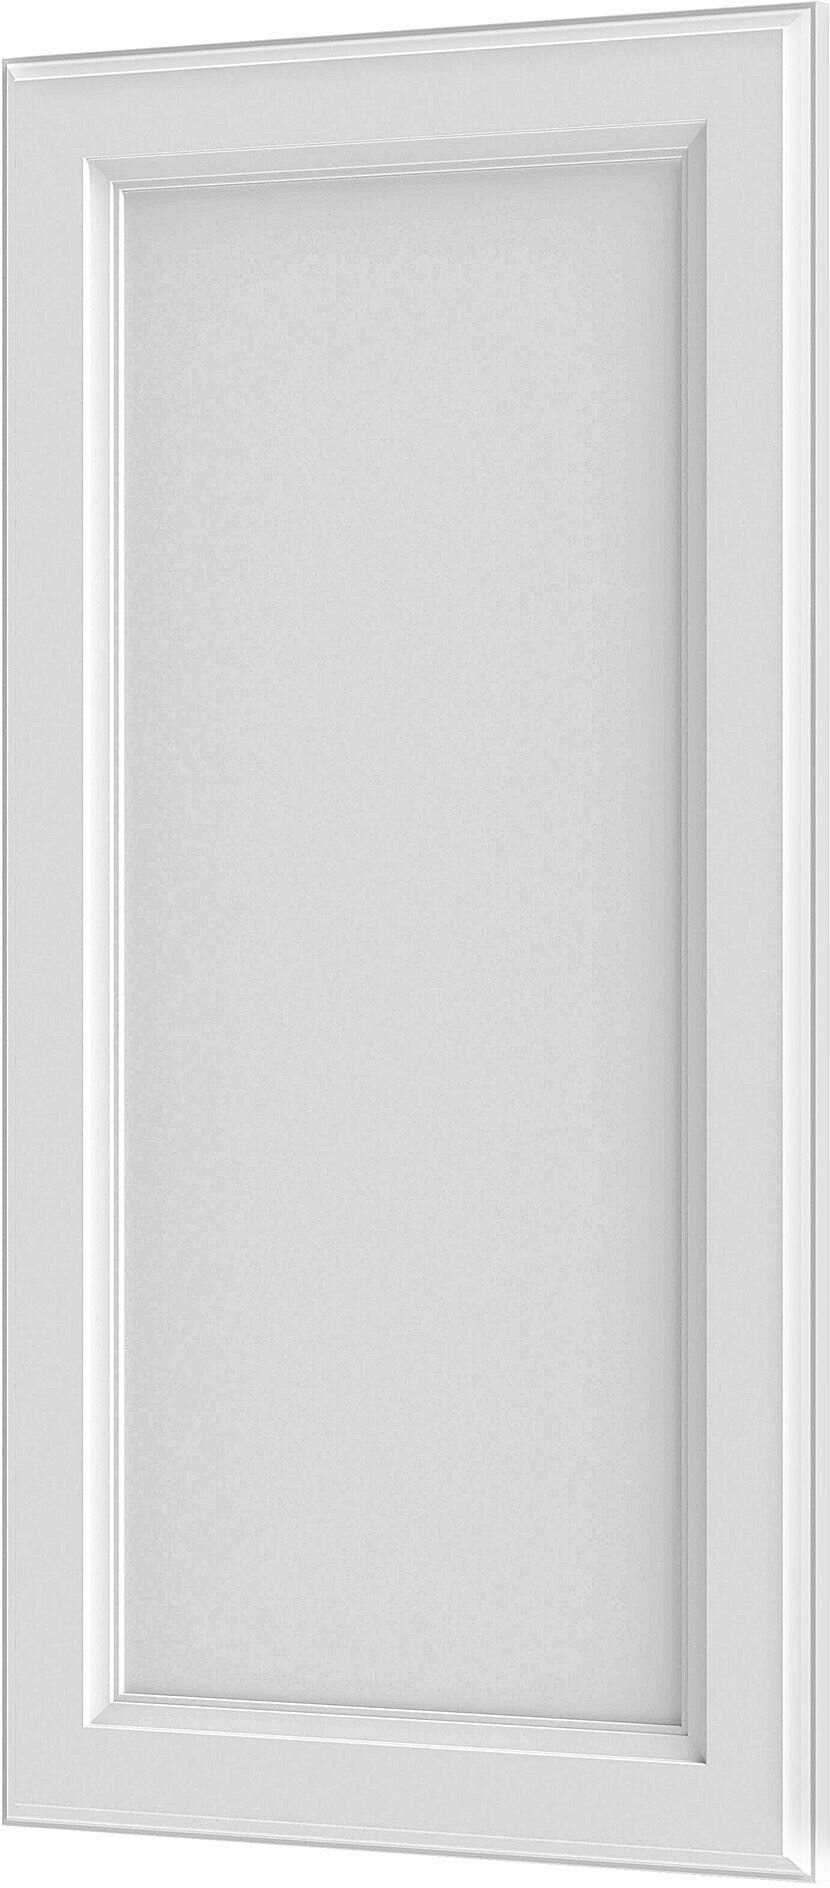 Фасад Арктик белоснежный дверца для углового шкафа В716Ш363